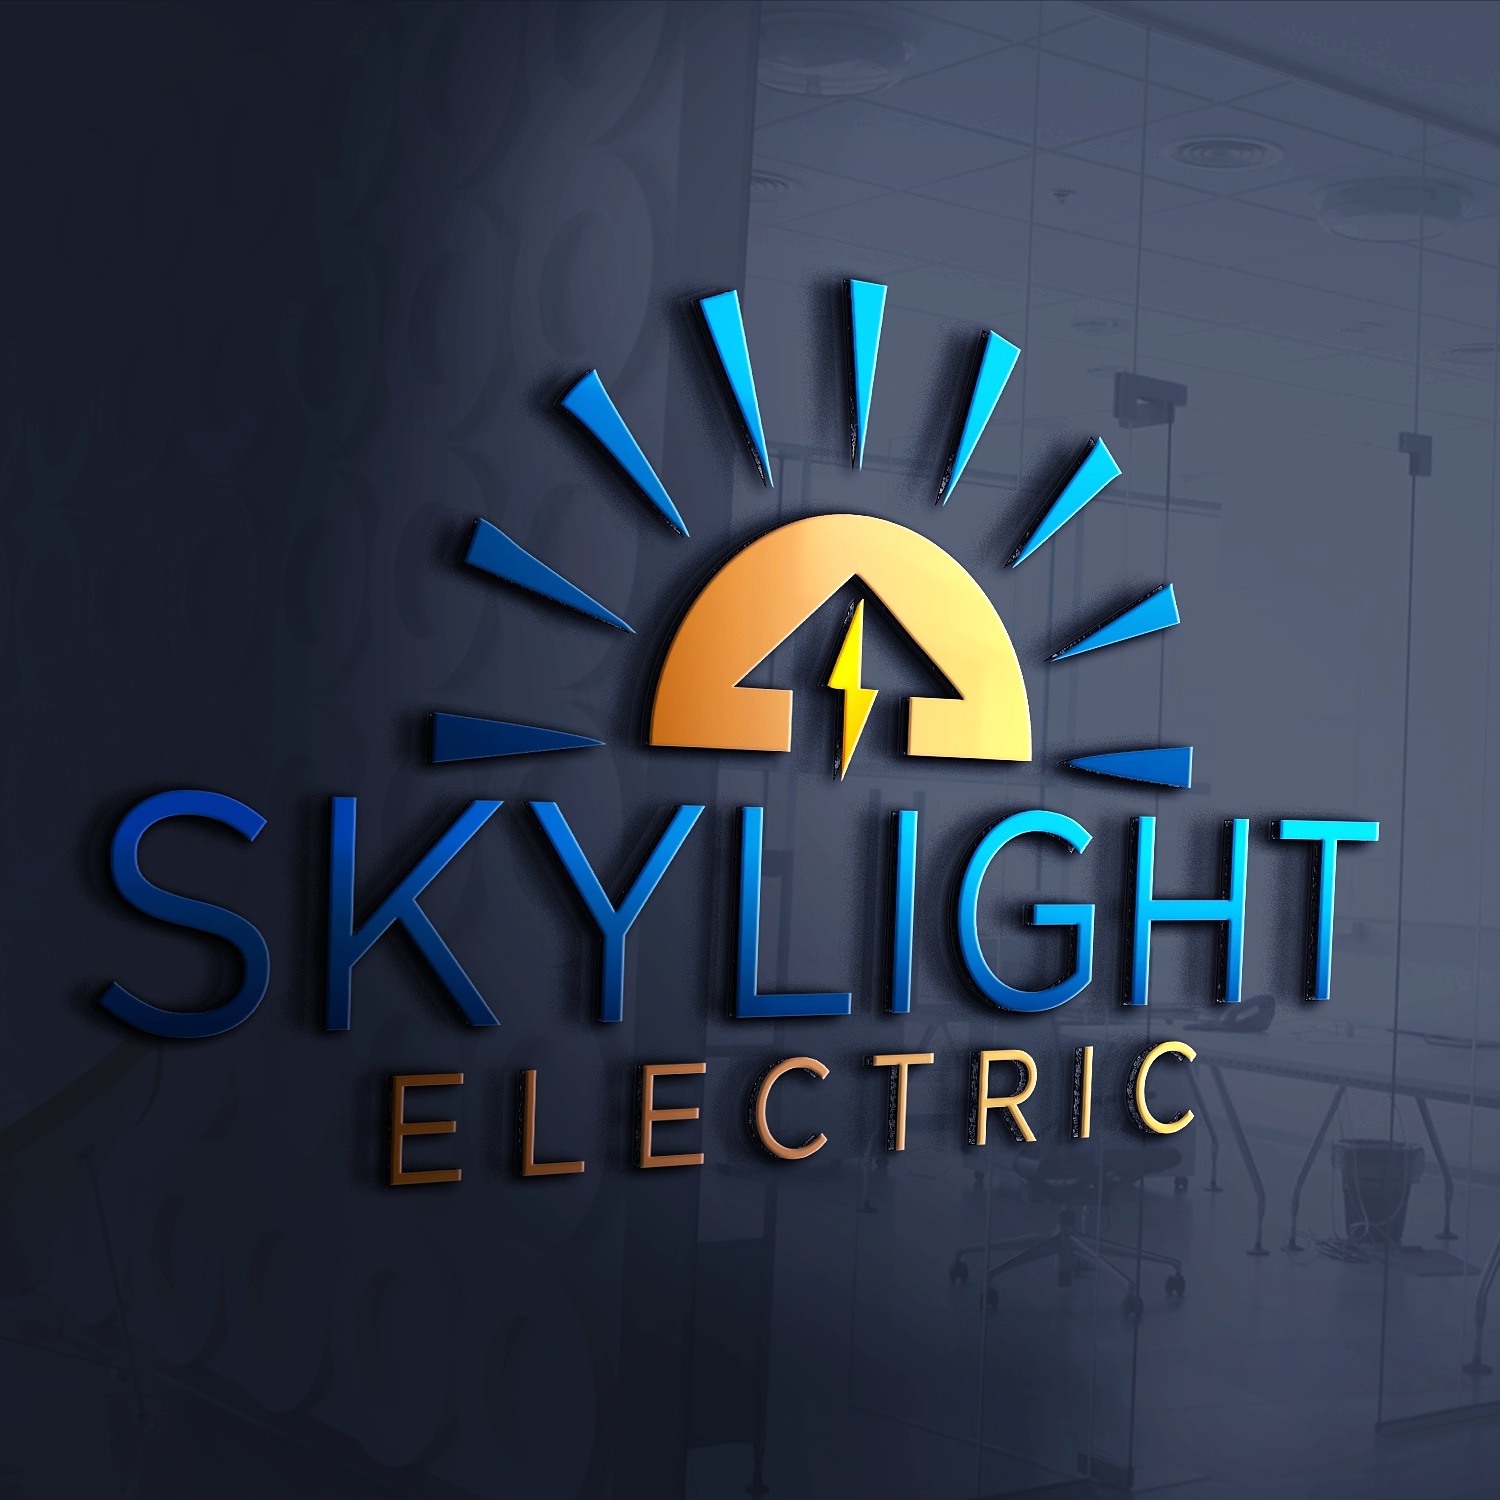 Skylight Electric ltd